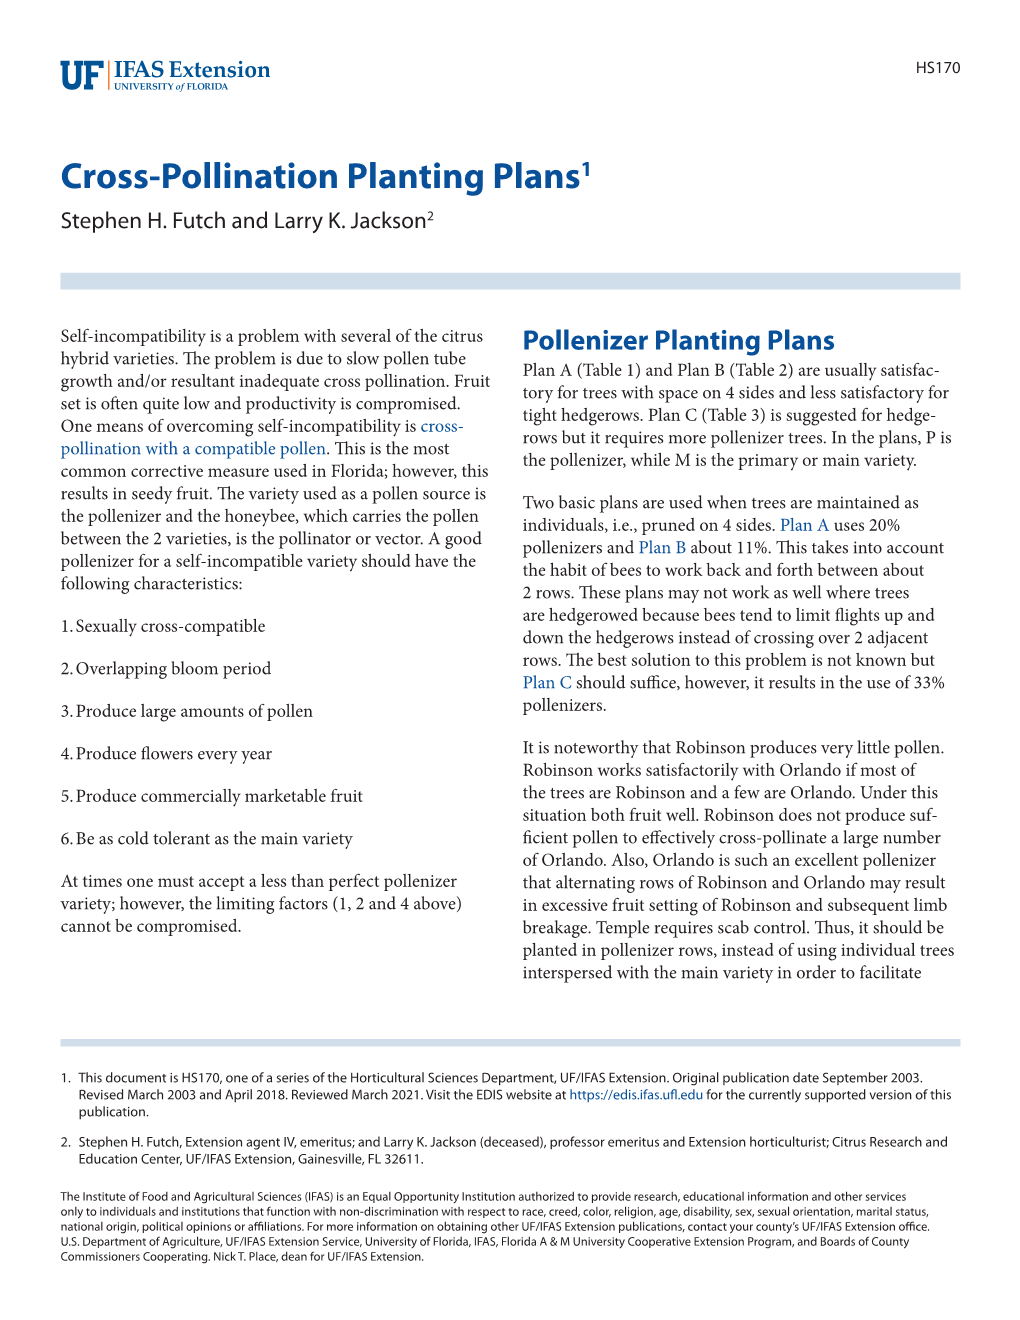 Cross-Pollination Planting Plans1 Stephen H